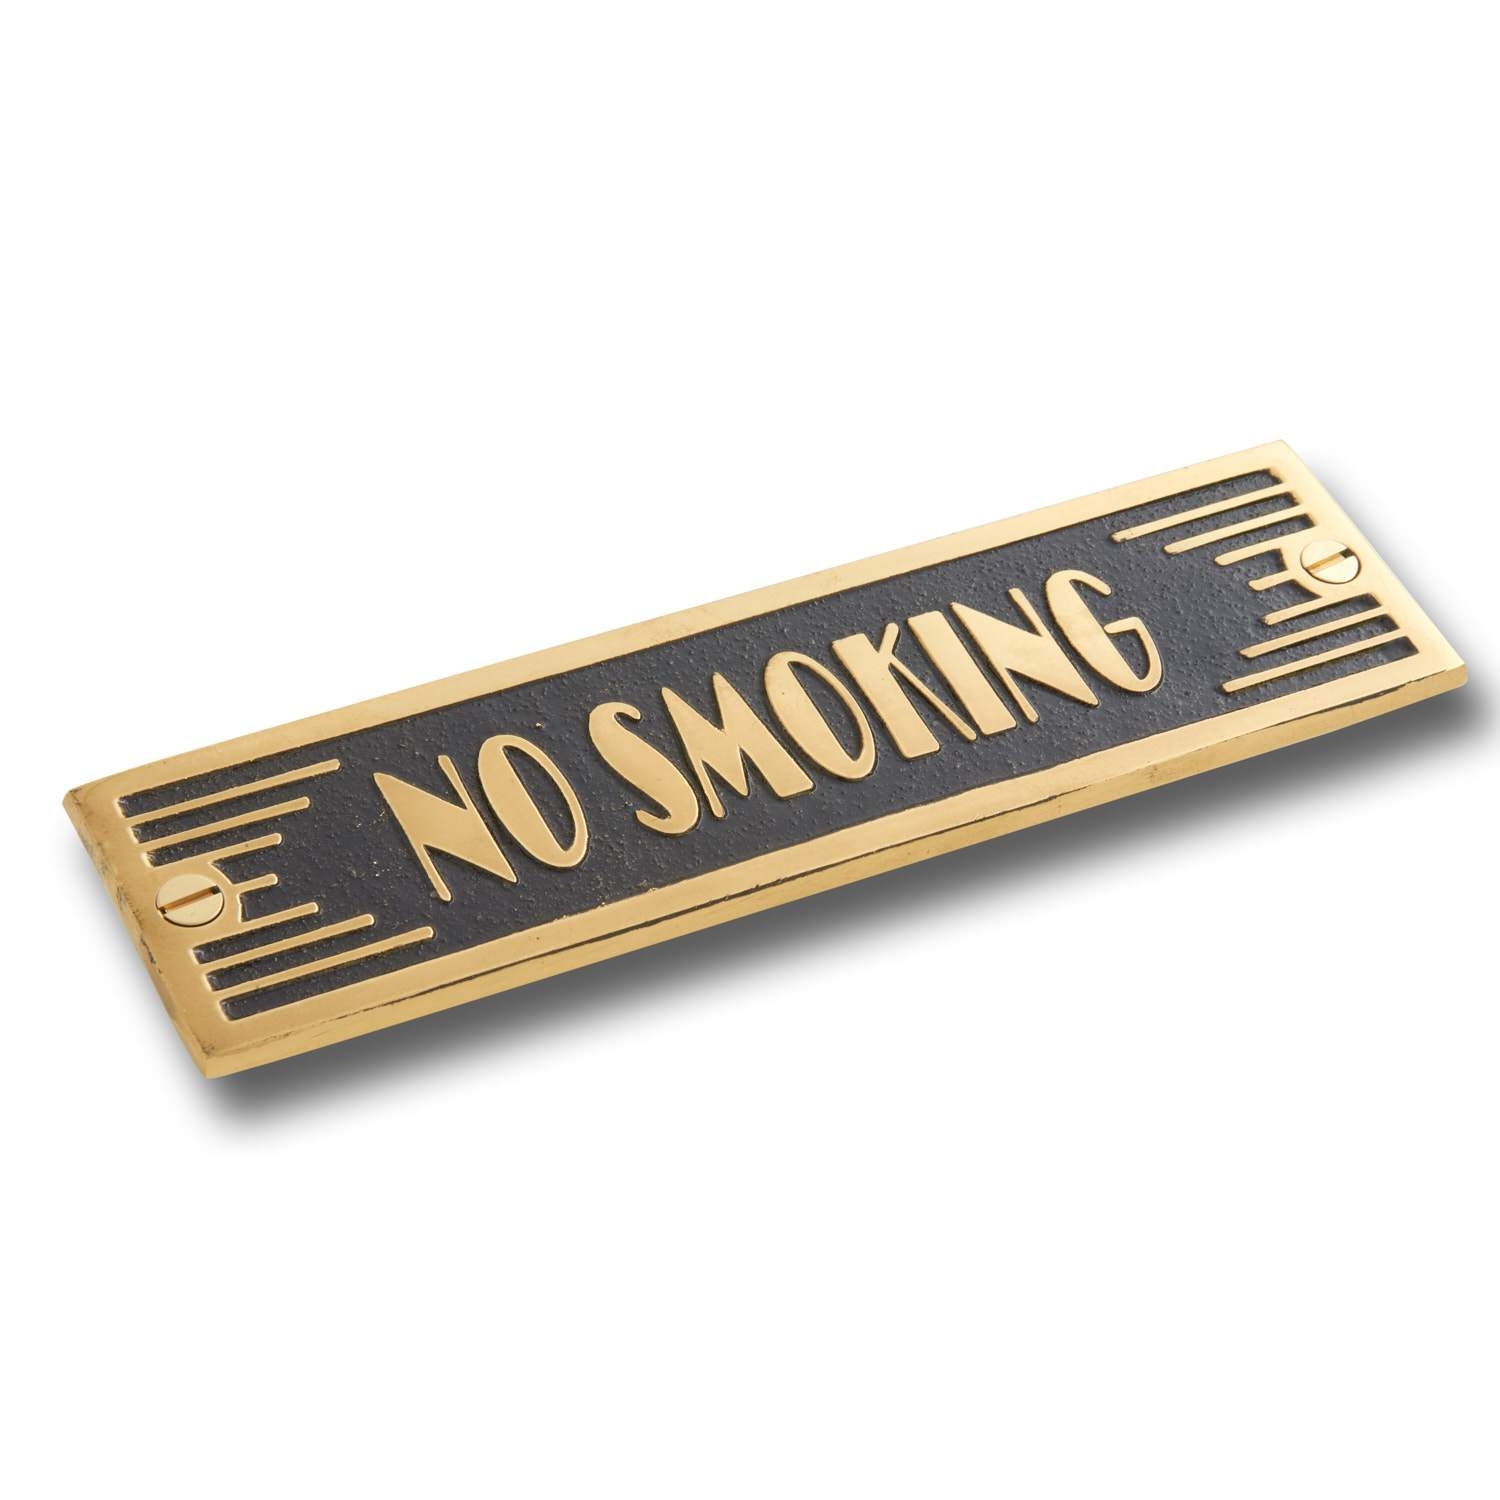 No Smoking Metal Door Sign.  Art Deco Style Home Décor Wall Plaque Accessories – No Smoking Brass